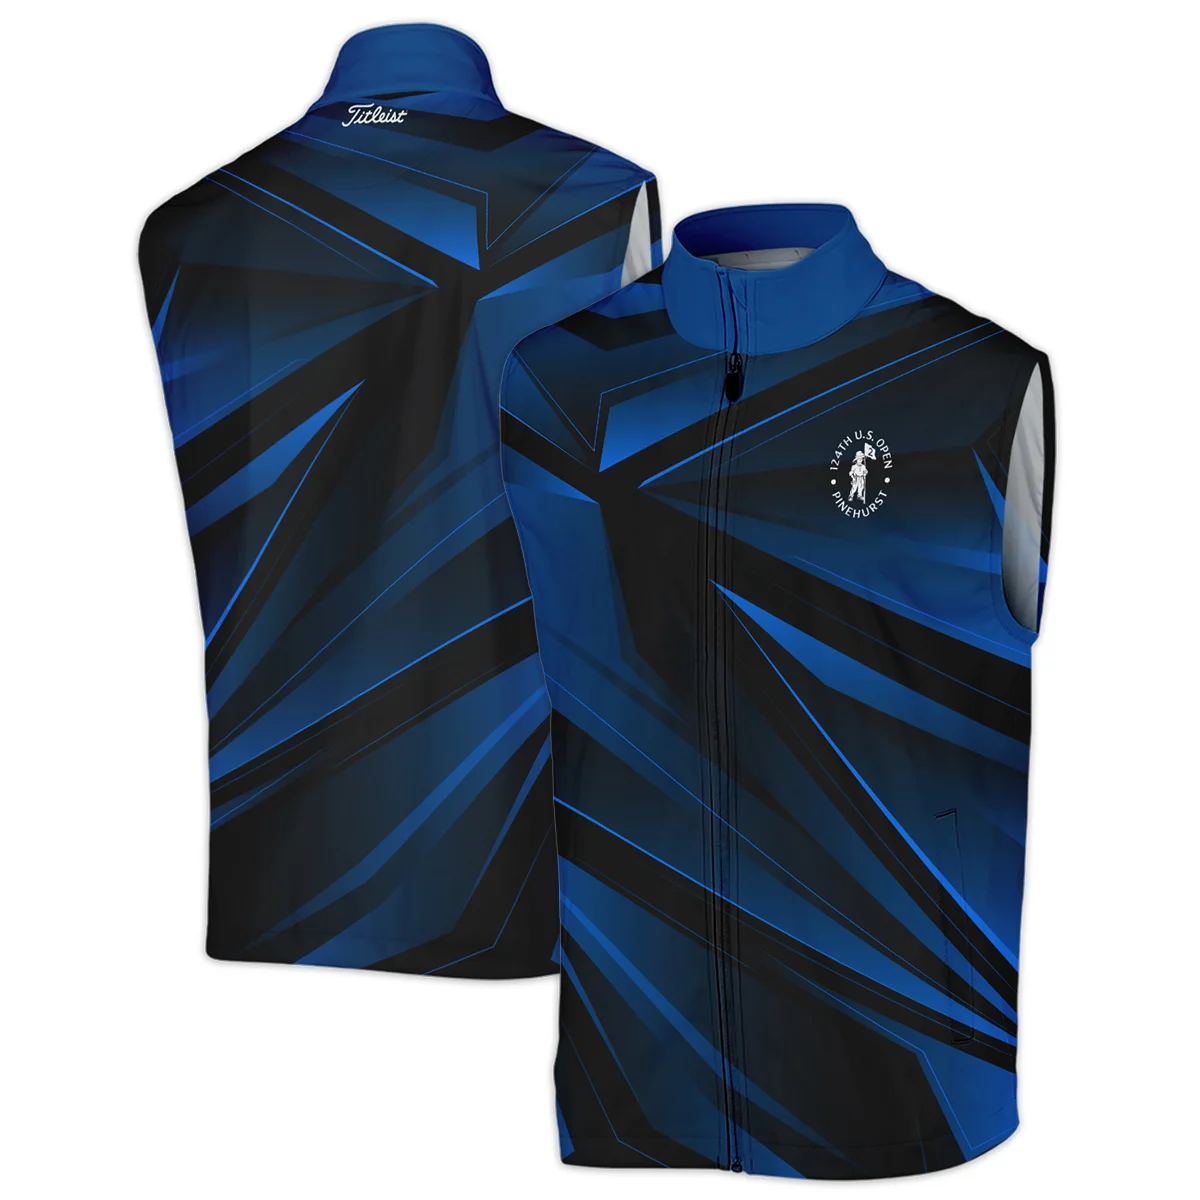 Titleist 124th U.S. Open Pinehurst Dark Blue Gradient Sublimation Polo Shirt Style Classic